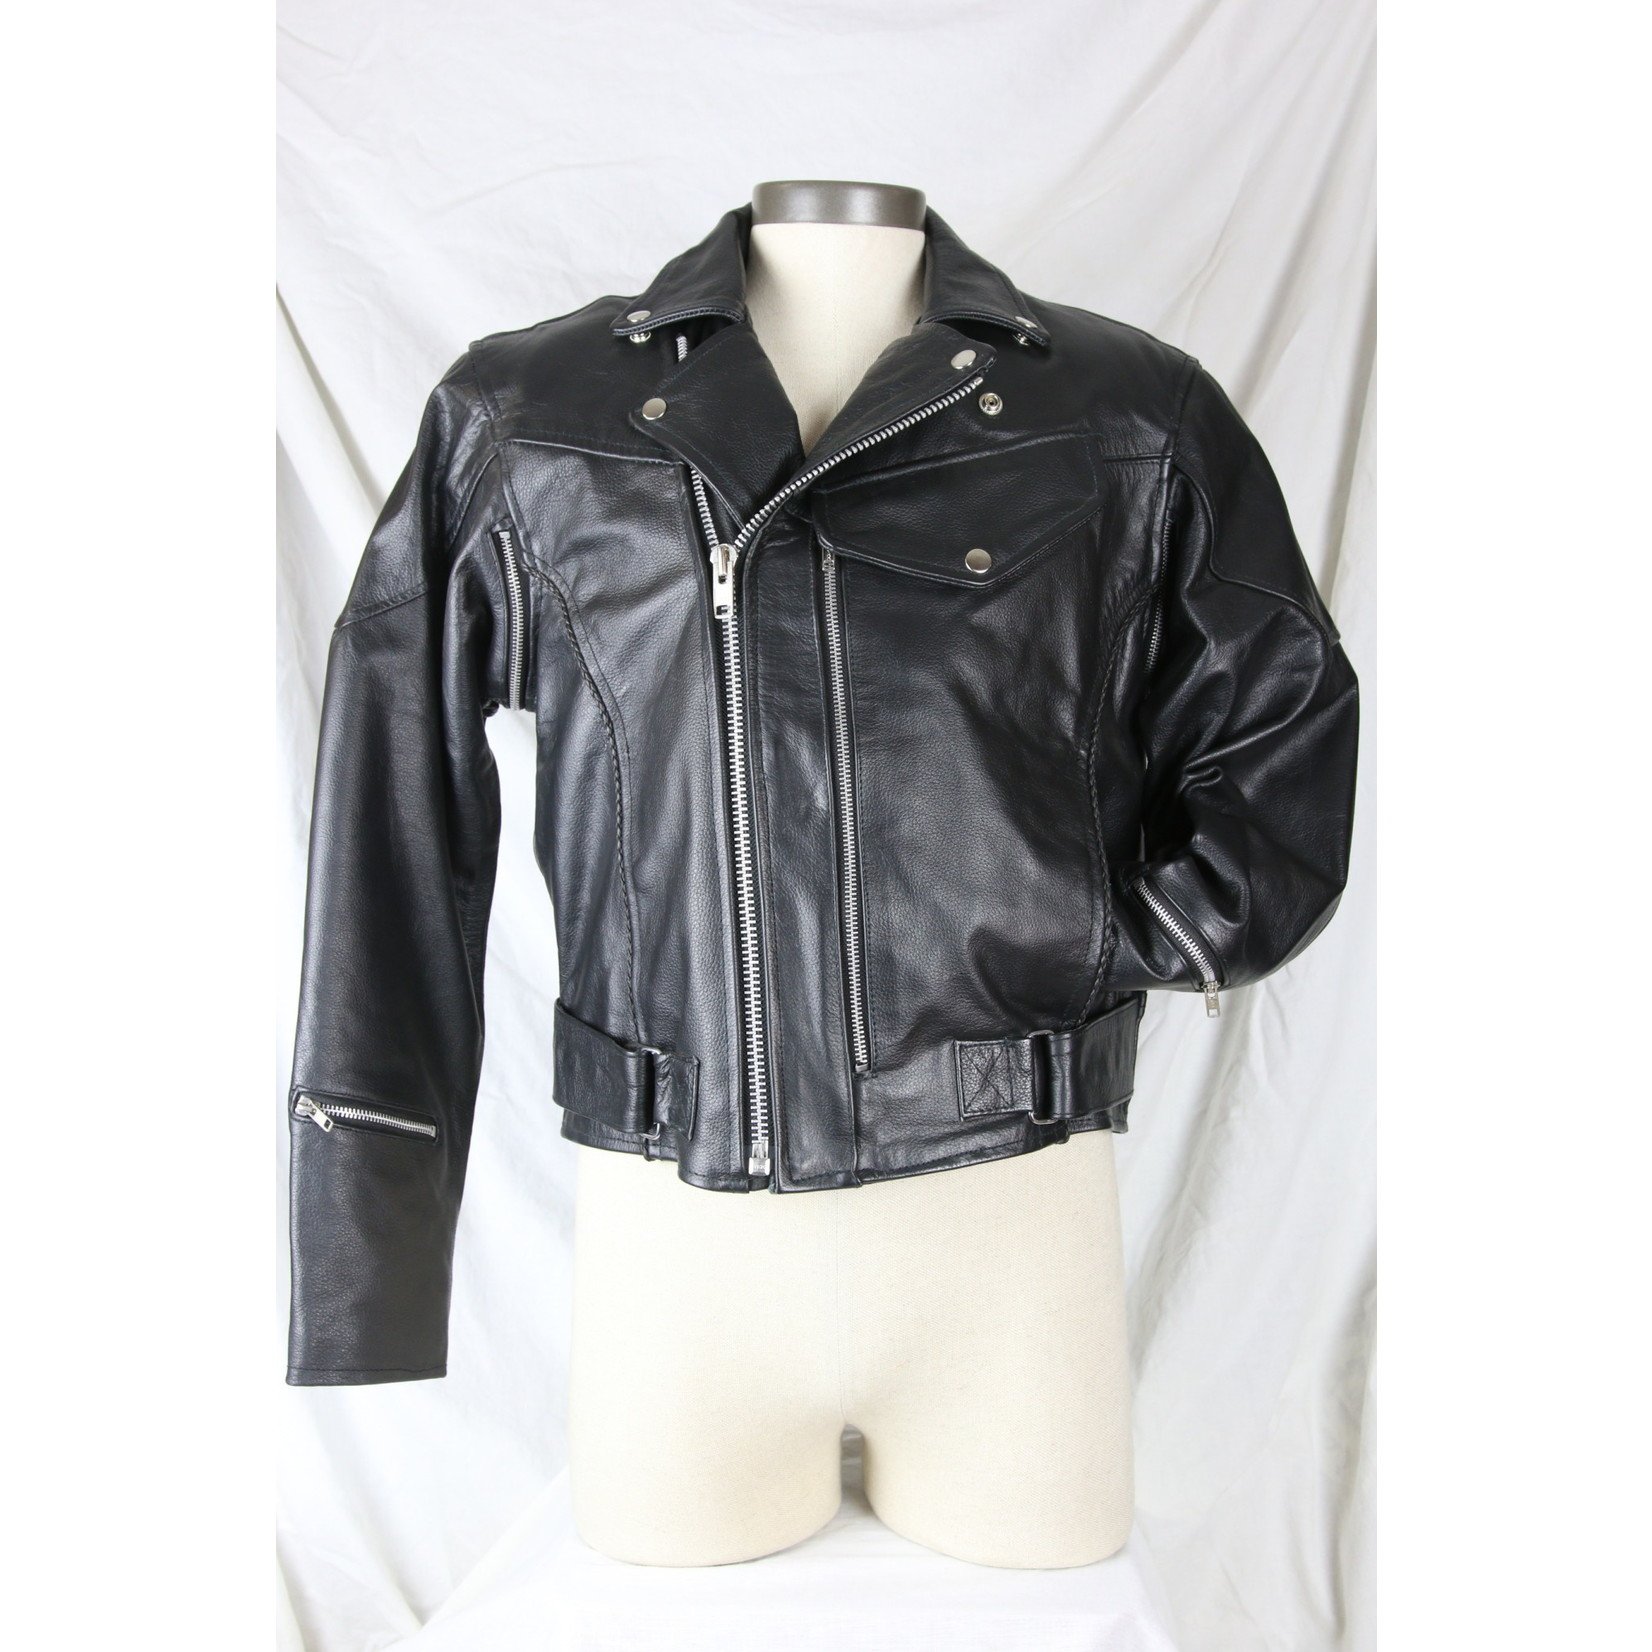 Cruise by Safari Men’s Black Leather Biker Jacket Vintage Style with Braid Detailing